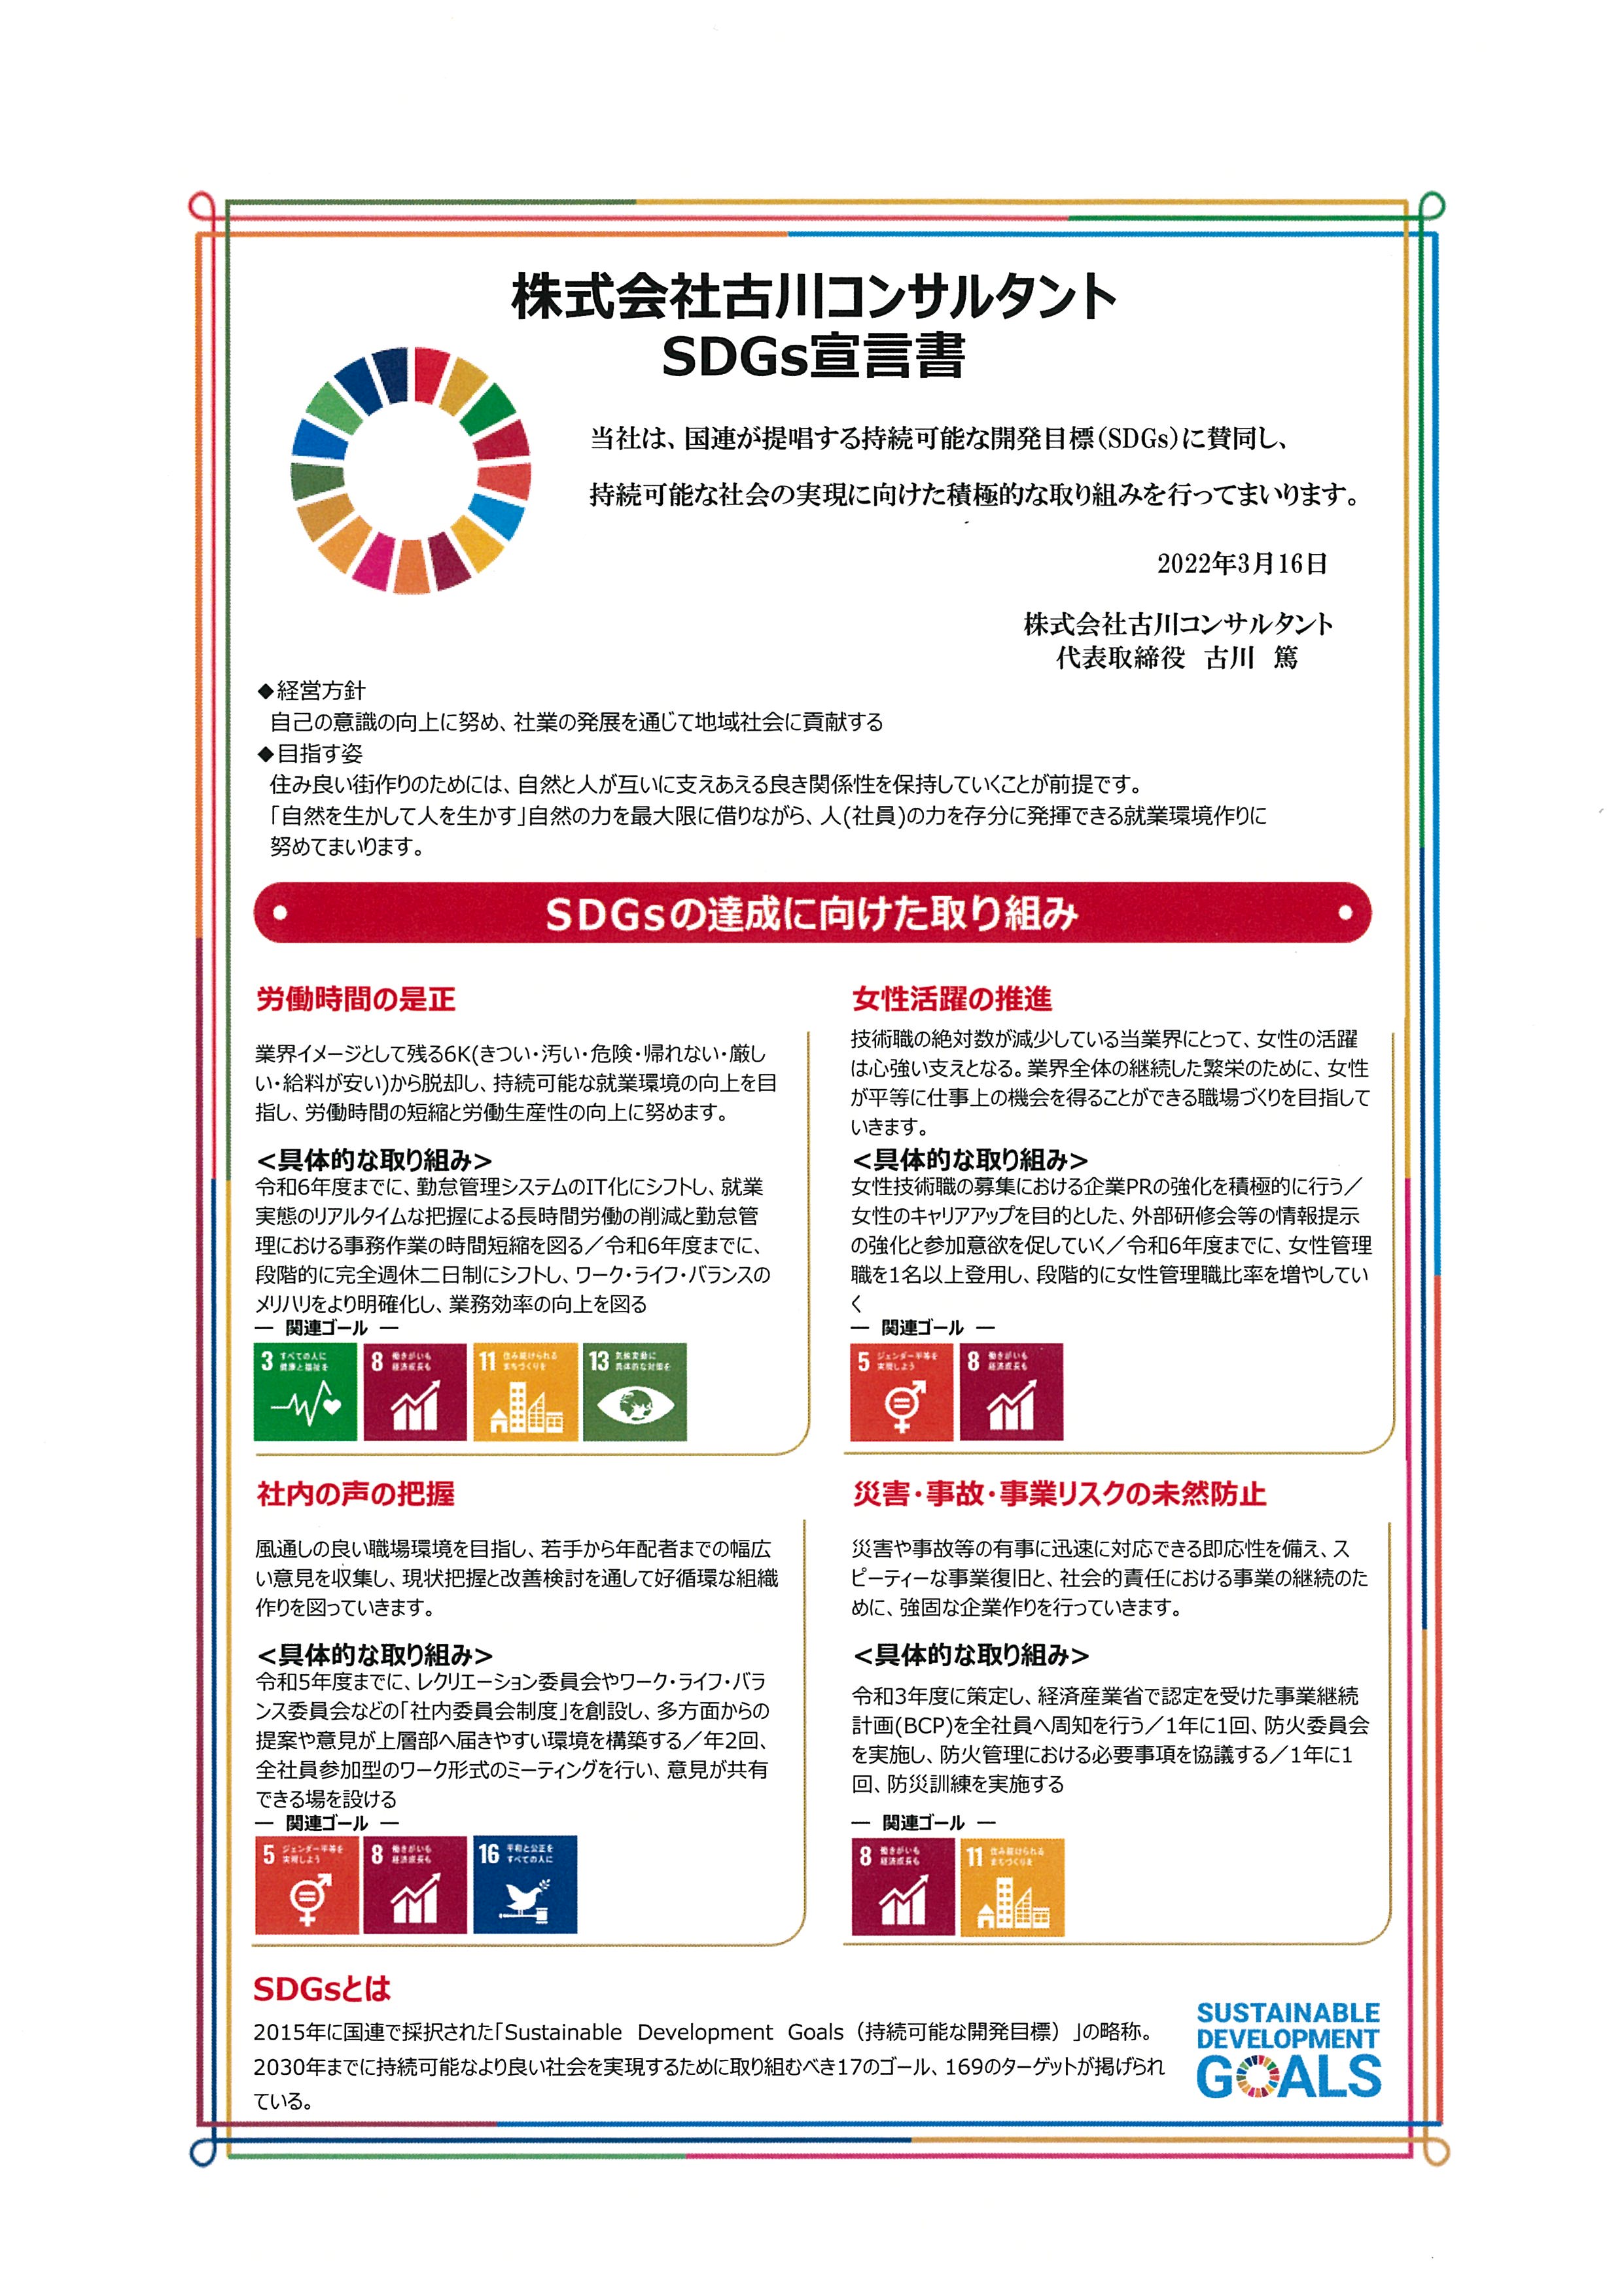 SDG'S宣言書